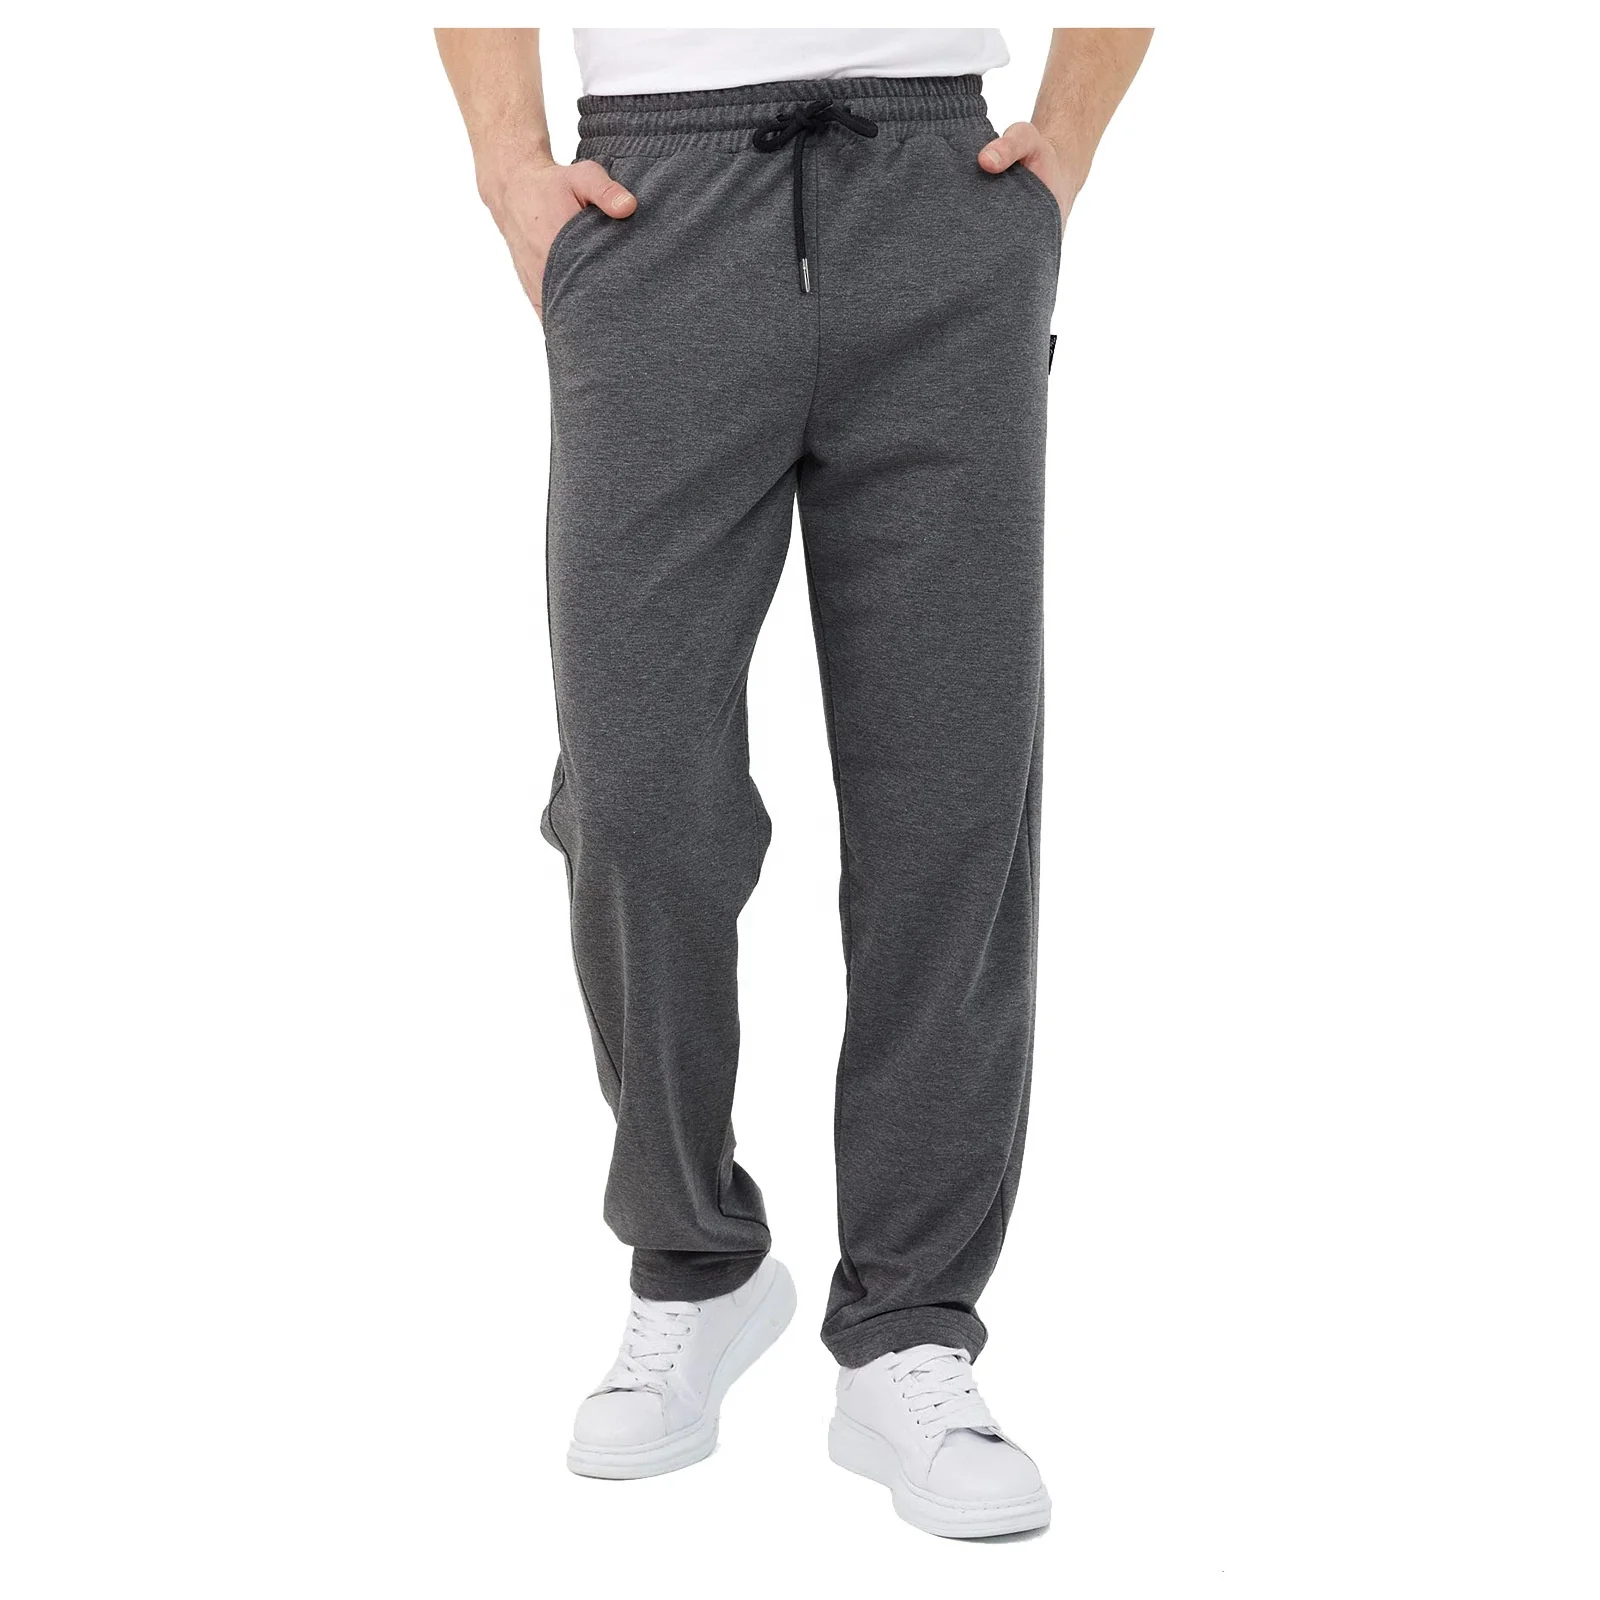 Men's Drawstring Loose Linen Beach Pants Lightweight Elastic Waist Yoga Lounge Cotton Trousers Pajamas